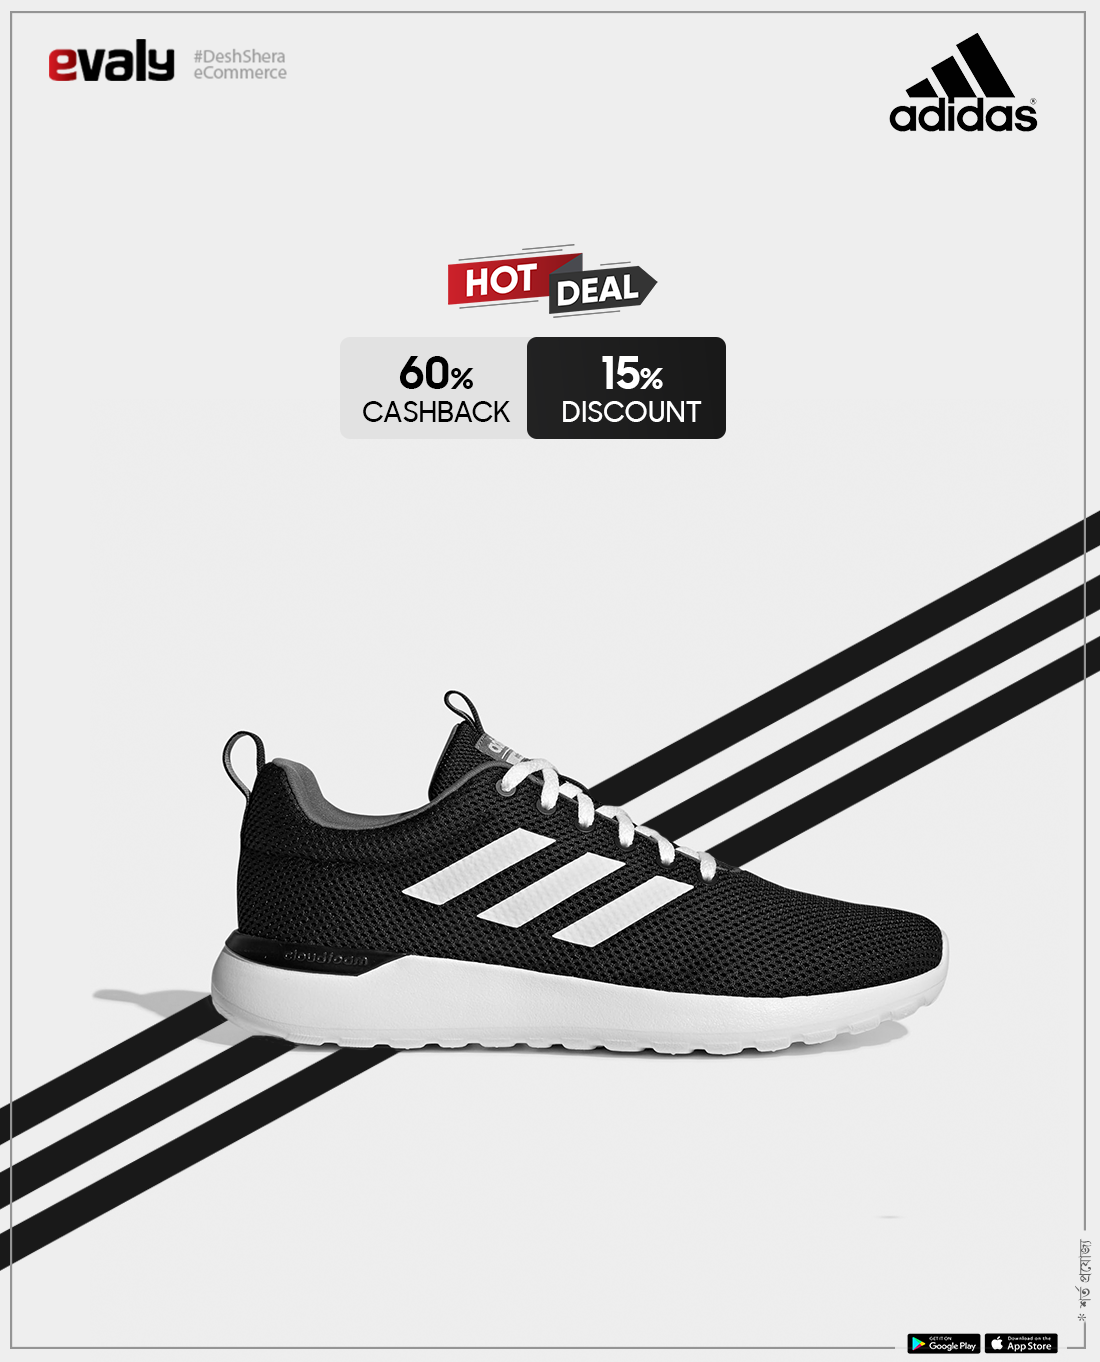 Adidas Creative ads on